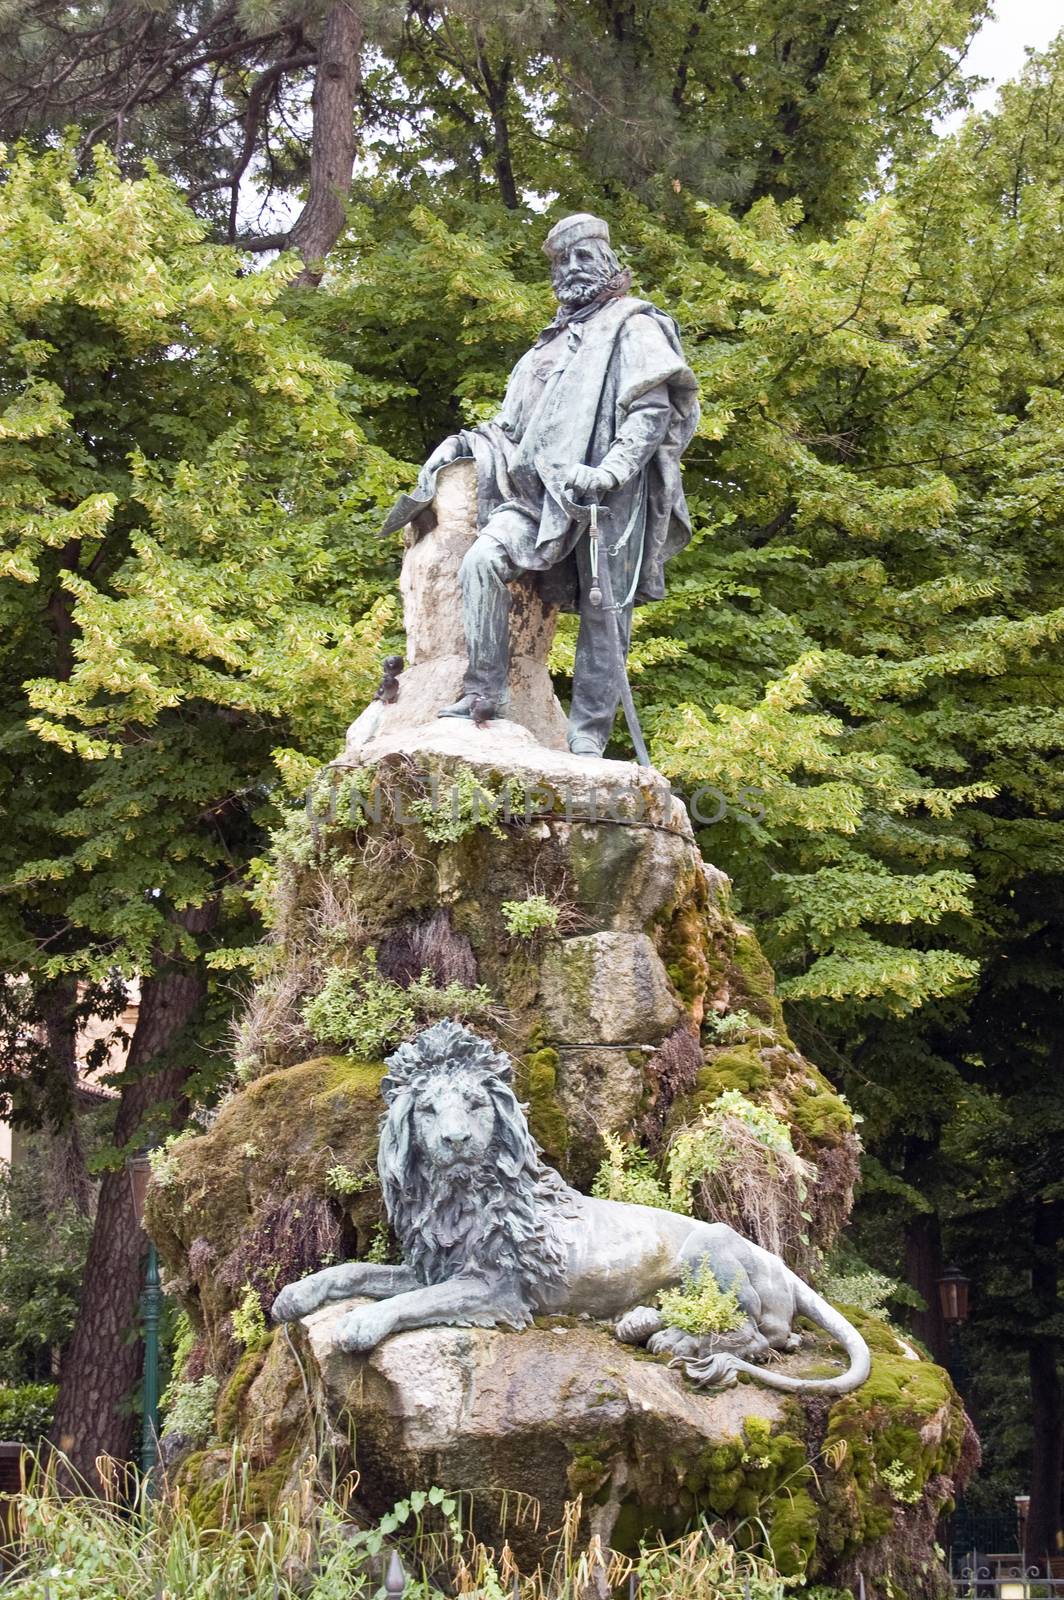 The impressive Monument to Giuseppe Garibaldi erected in 1885 in the Giardini, Venice, Italy. On public display over 100 years.